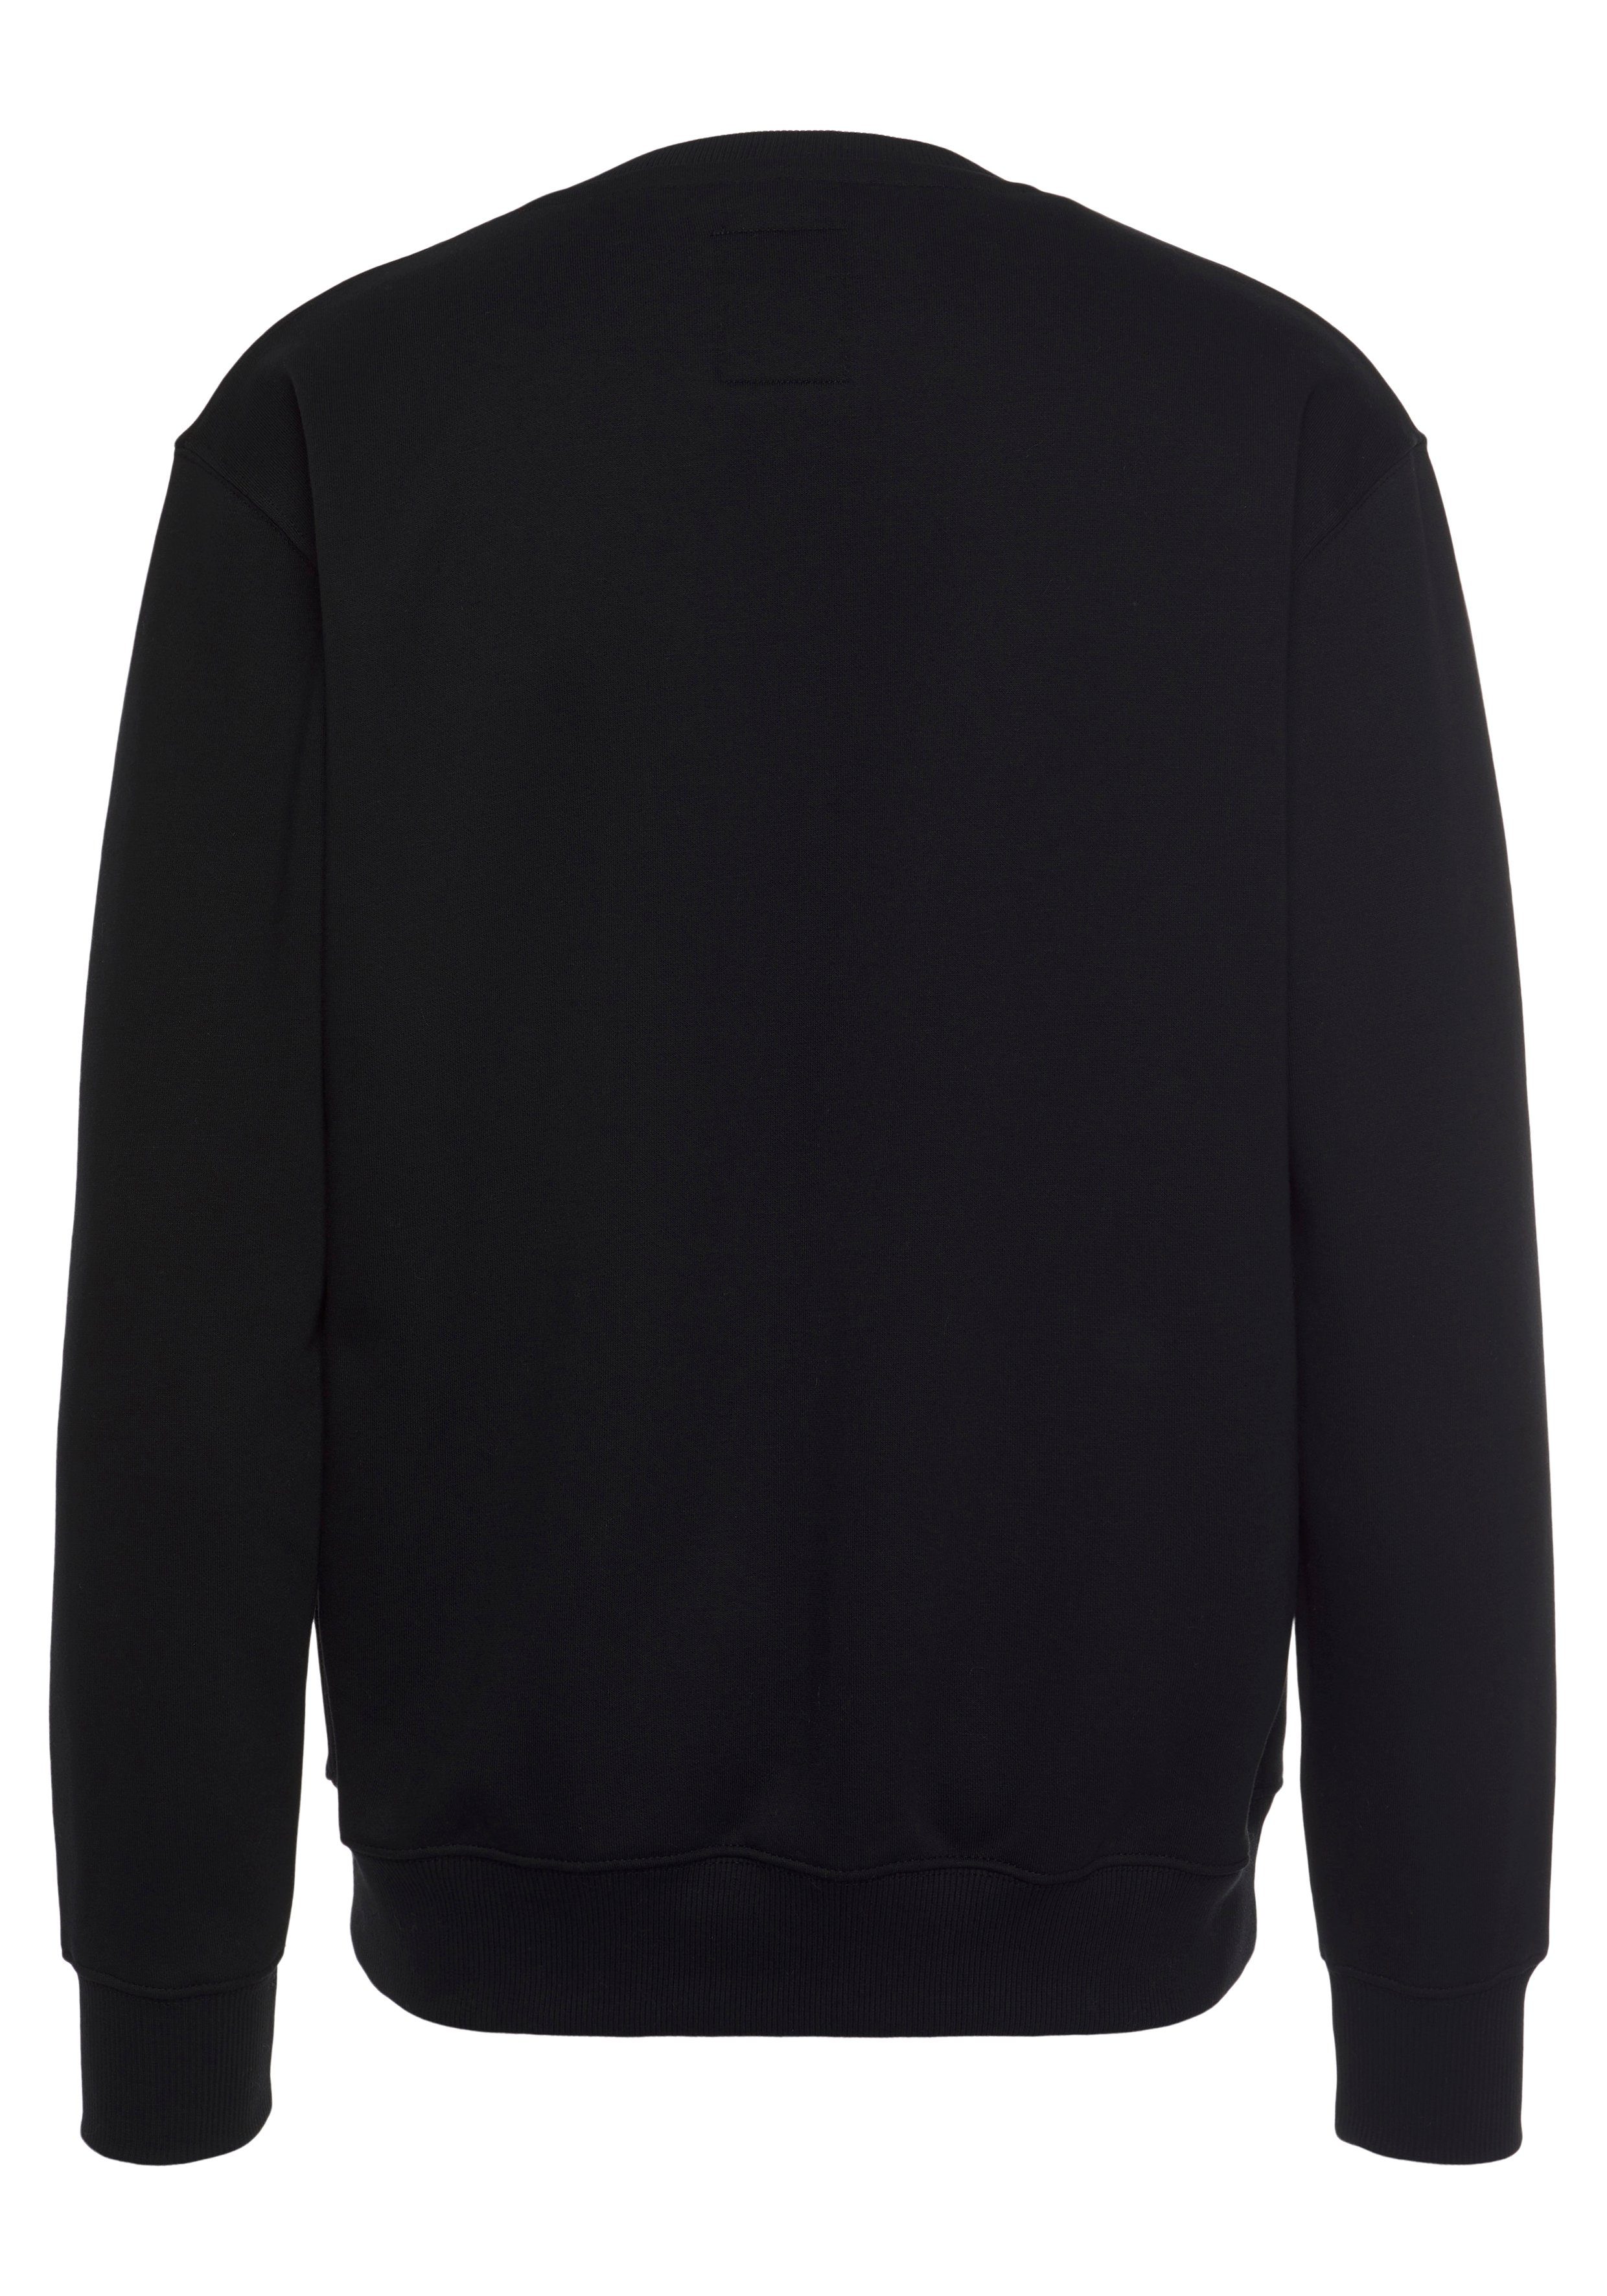 Alpha Industries Sweatshirt Basic Sweater black